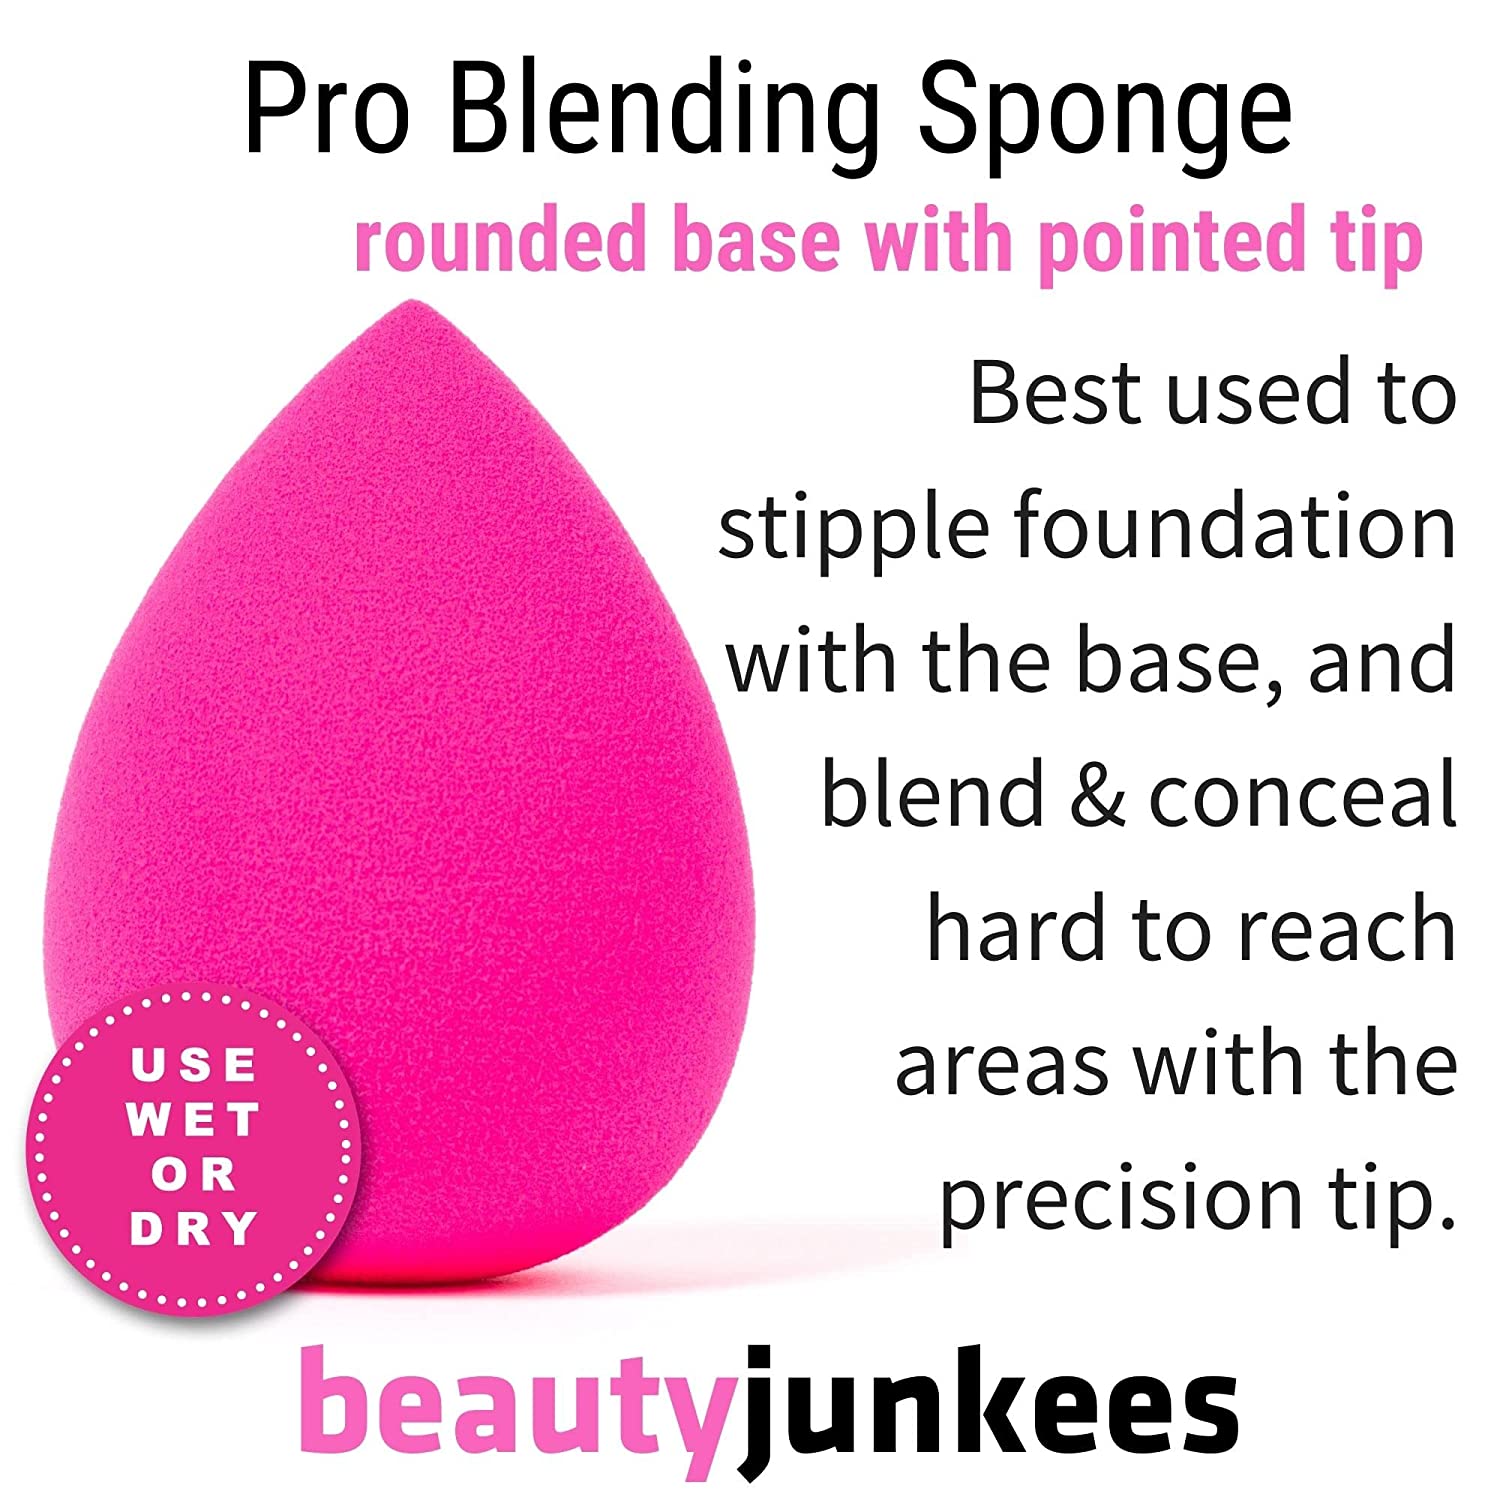 Southwit Makeup Sponge Blender - Pink Egg Foundation Makeup Blender Sponge, Liquid Cream Powder Contour Blending Sponges, Make Up Applicator, Cosmetic Blenders, Wet Dry Beauty Sponge, Latex Free - image 3 of 5